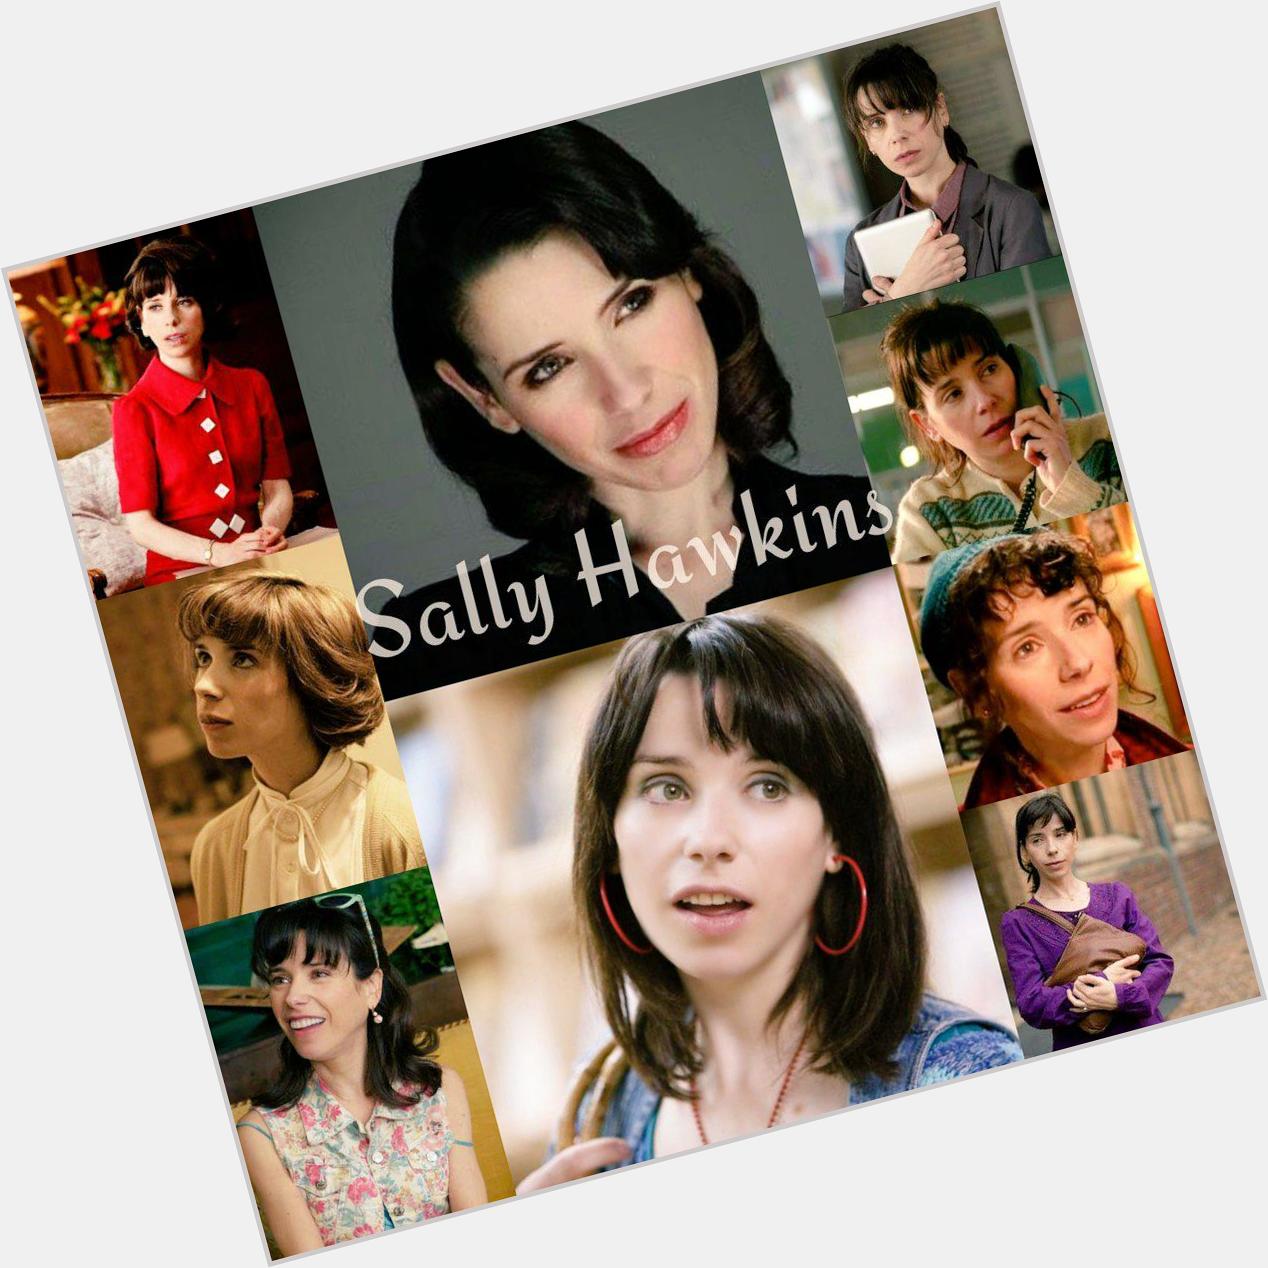 Happy birthday Sally Hawkins! 